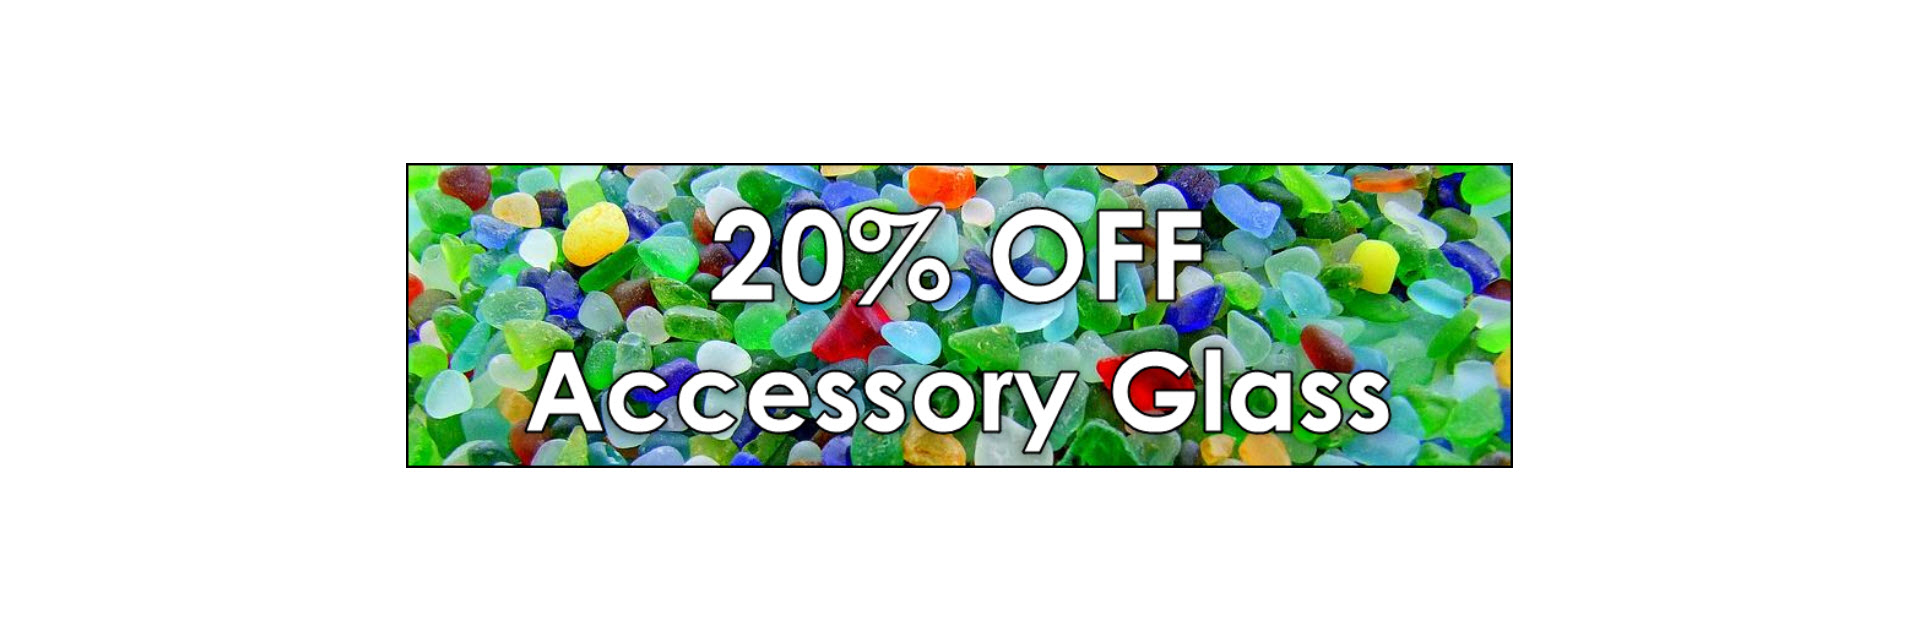 Accessory Glass Sale